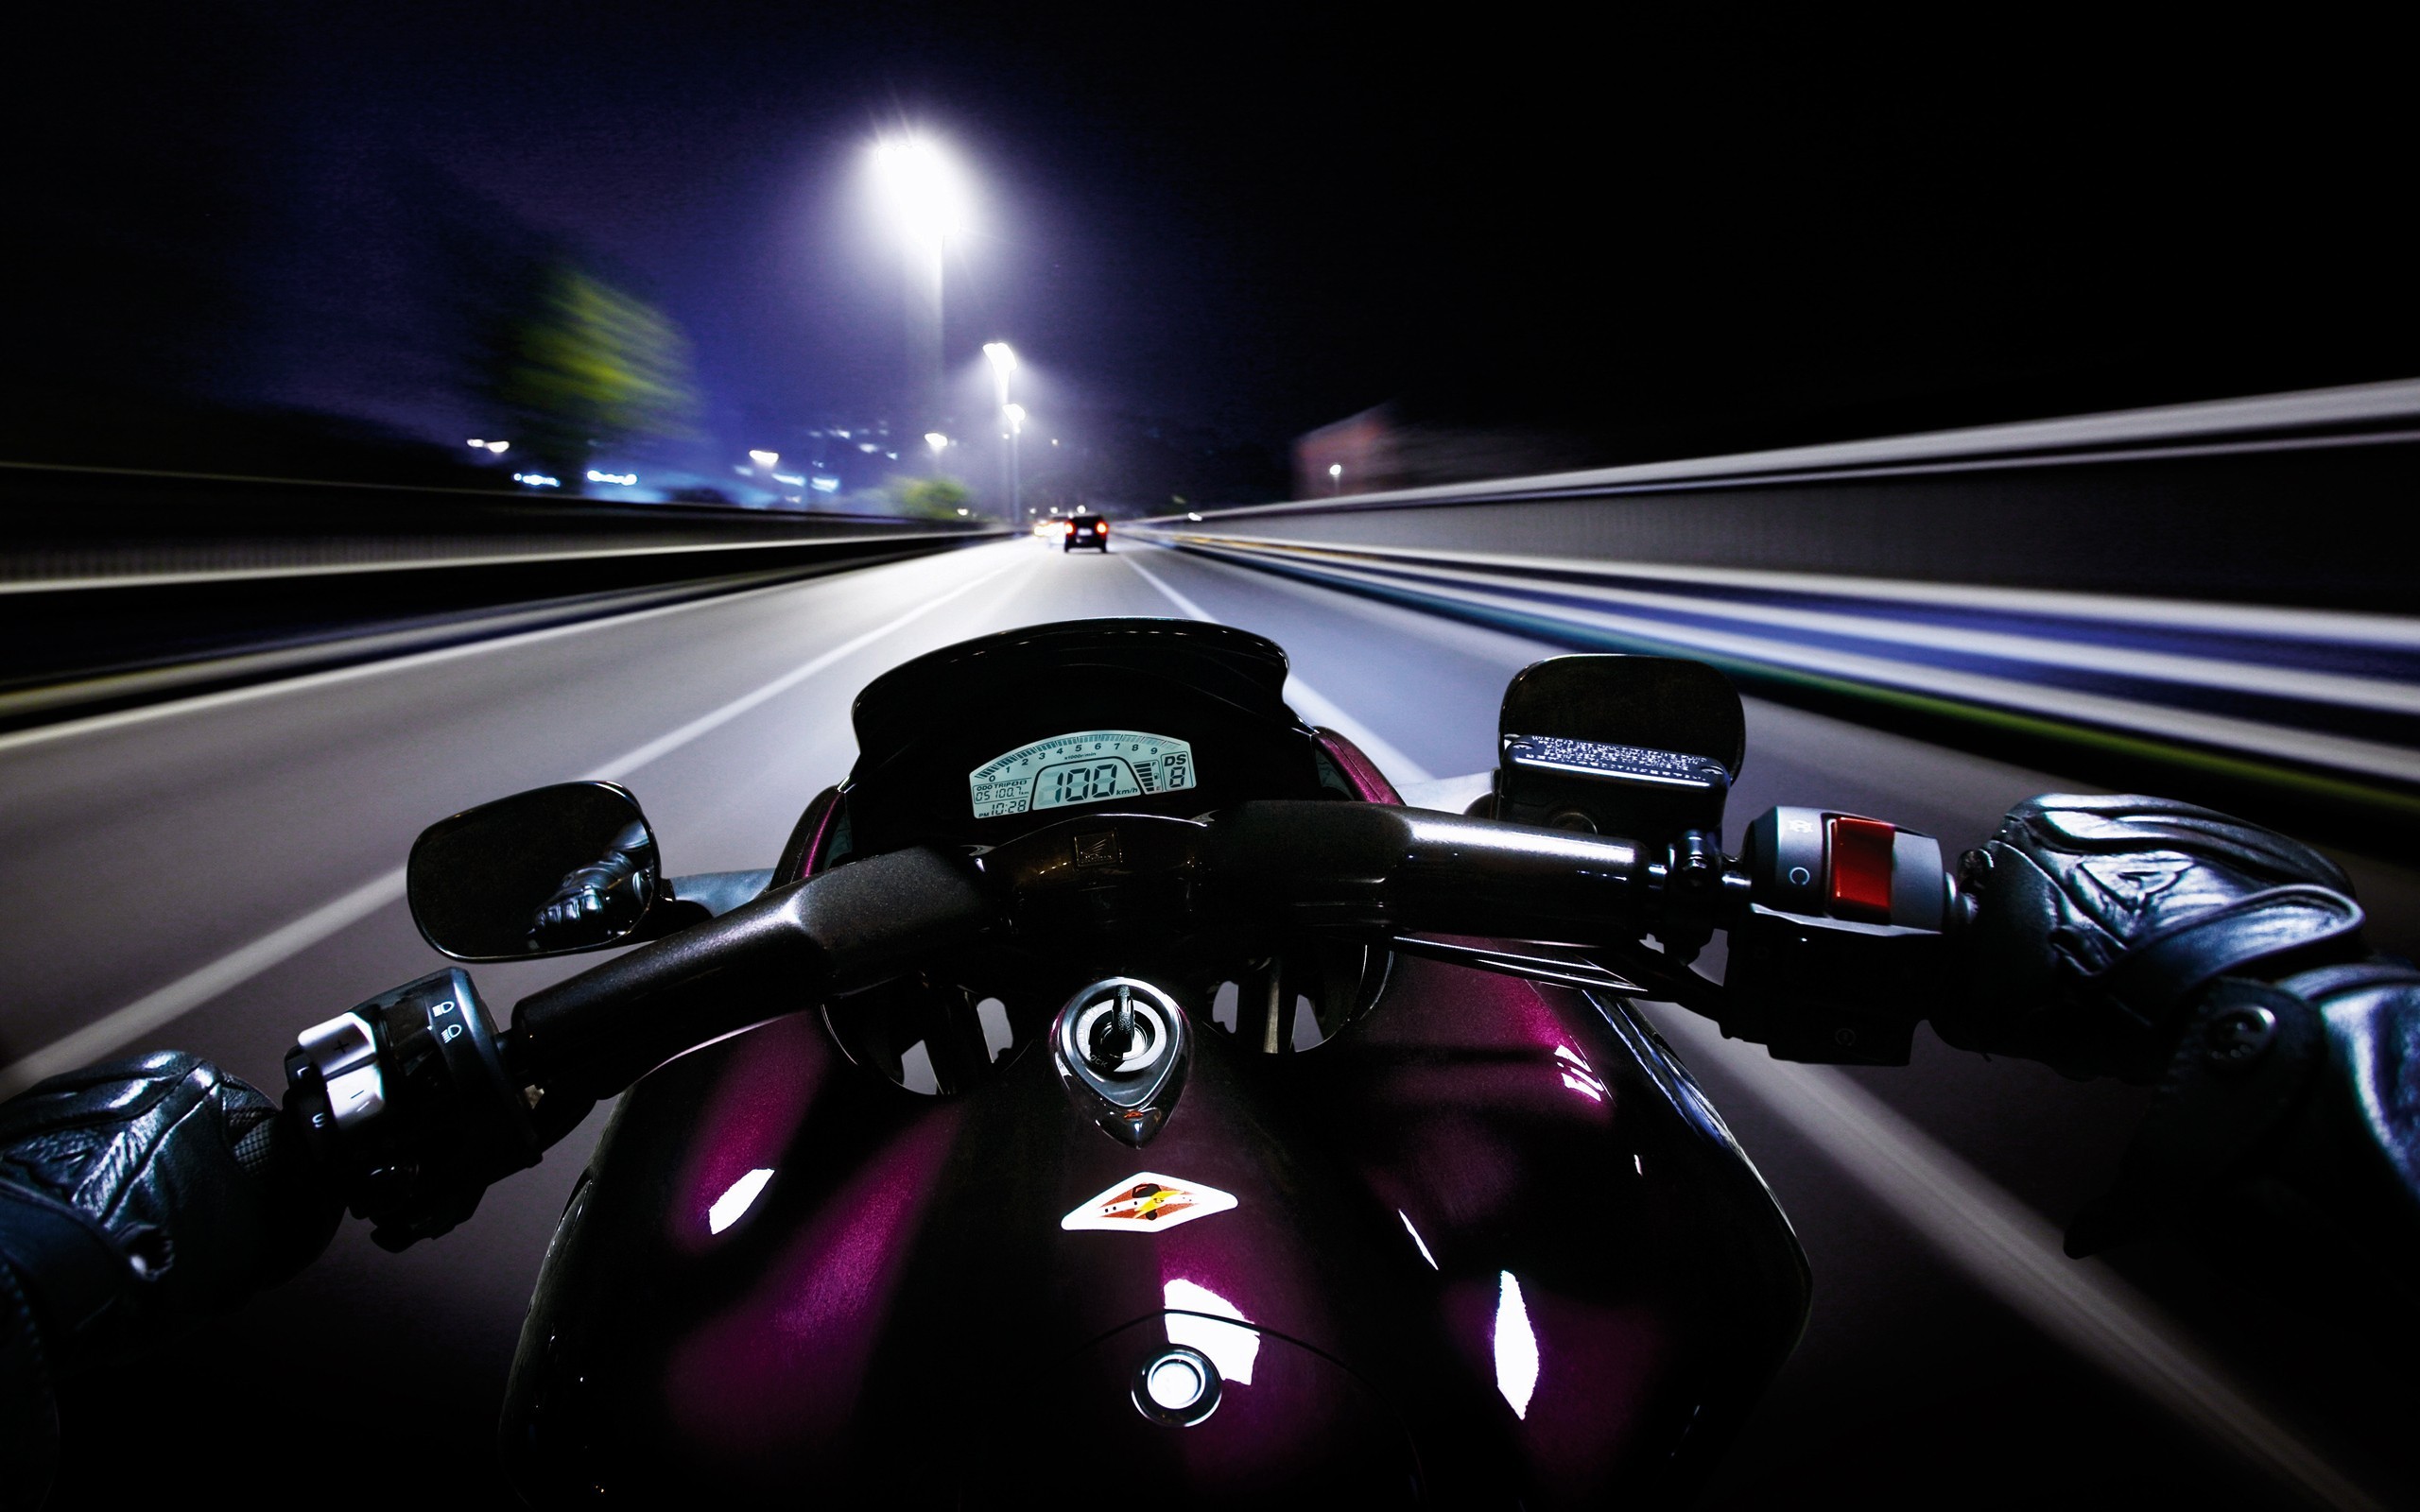 General 2560x1600 motorcycle night speedometer POV vehicle road